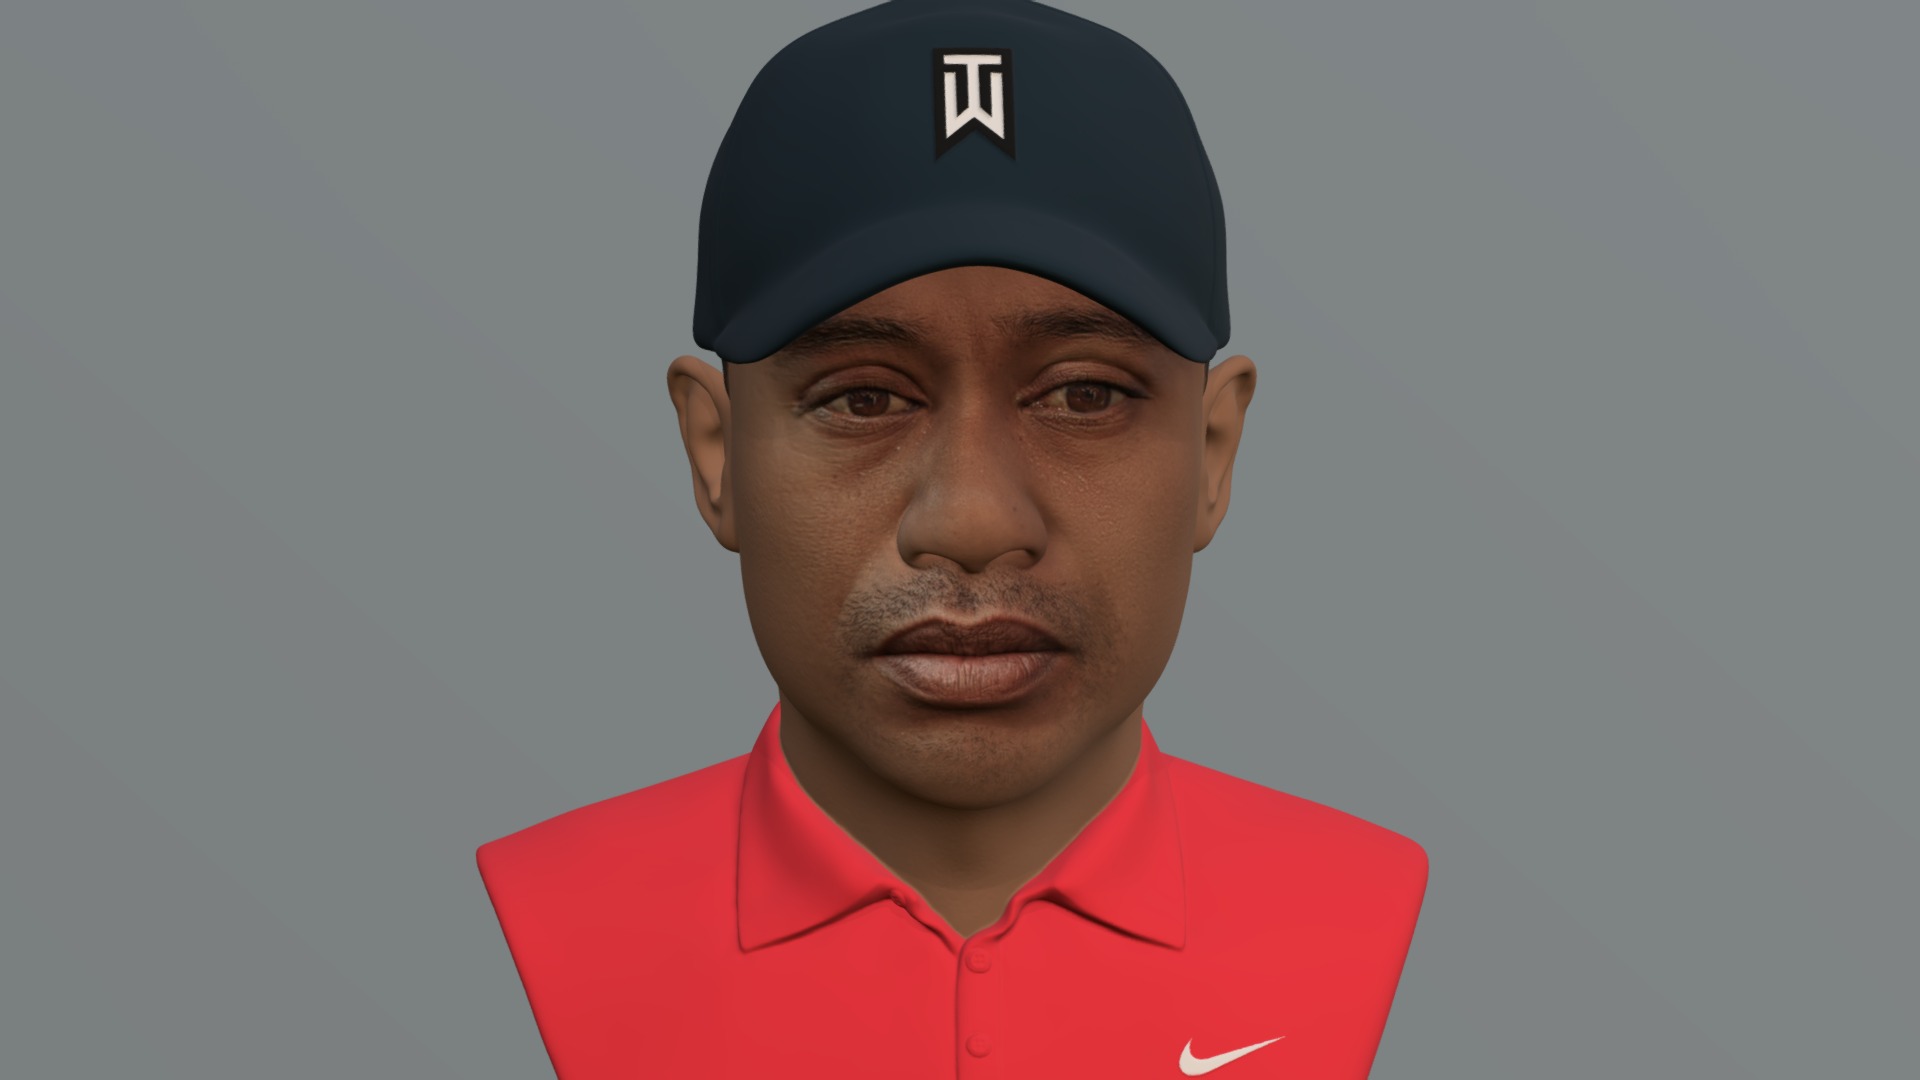 3D model Tiger Woods bust for full color 3D printing - This is a 3D model of the Tiger Woods bust for full color 3D printing. The 3D model is about a man wearing a hat.